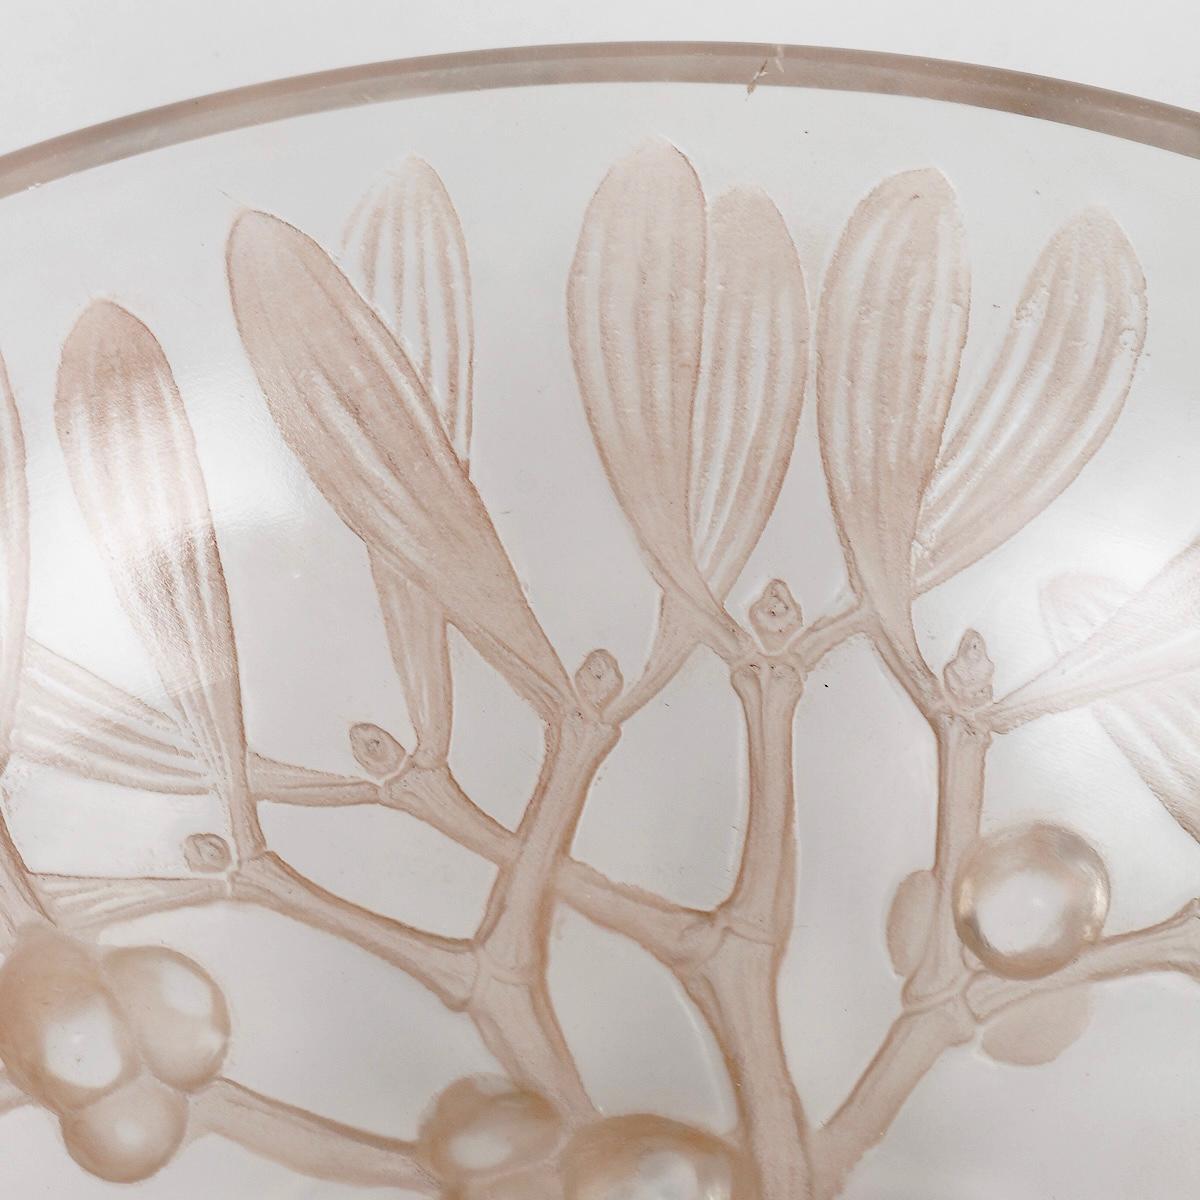 Molded 1921 René Lalique -Bowl Gui Mistletoe Glass with Sepia Patina For Sale